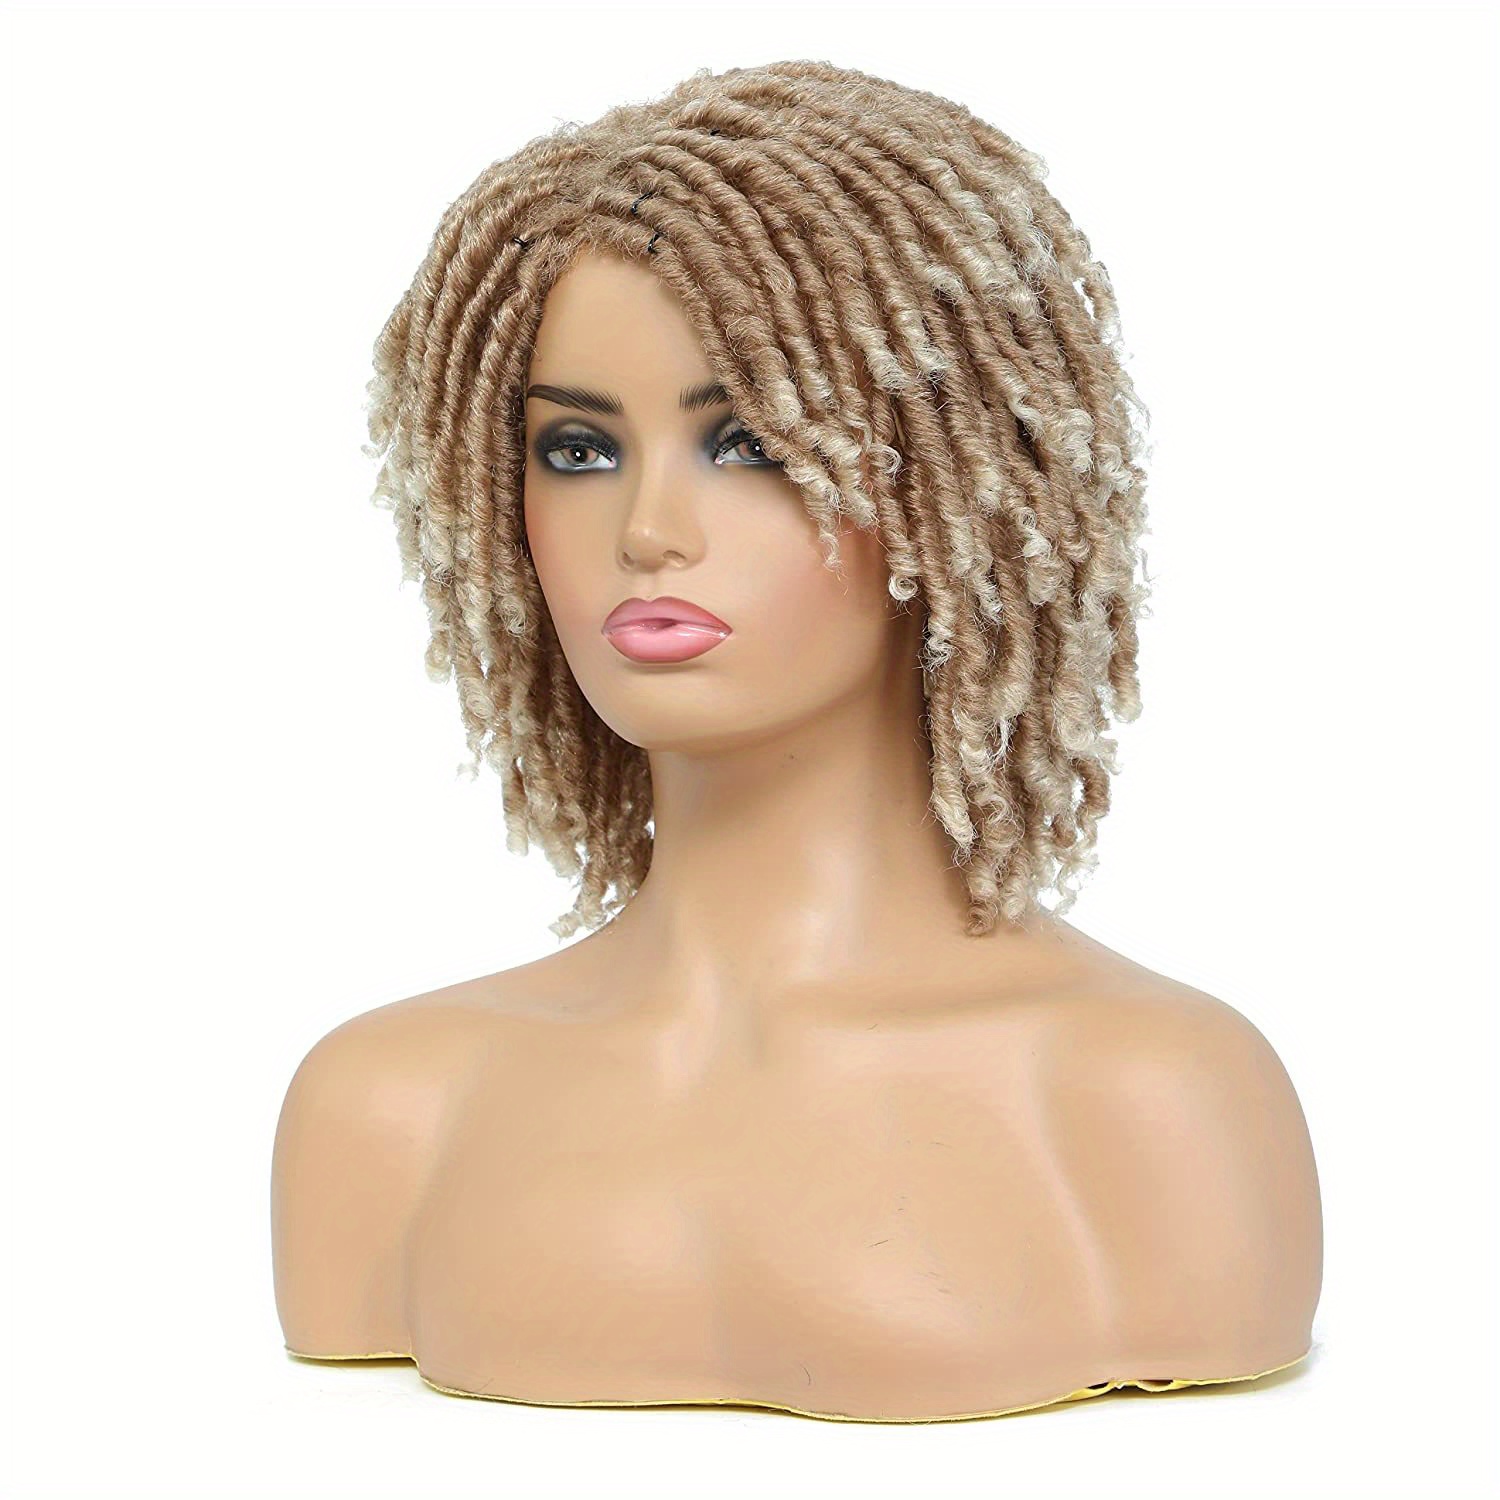 Ombre Blonde Dreadlock Wigs Short Curly Twist Wigs For Women Afro Curly ...